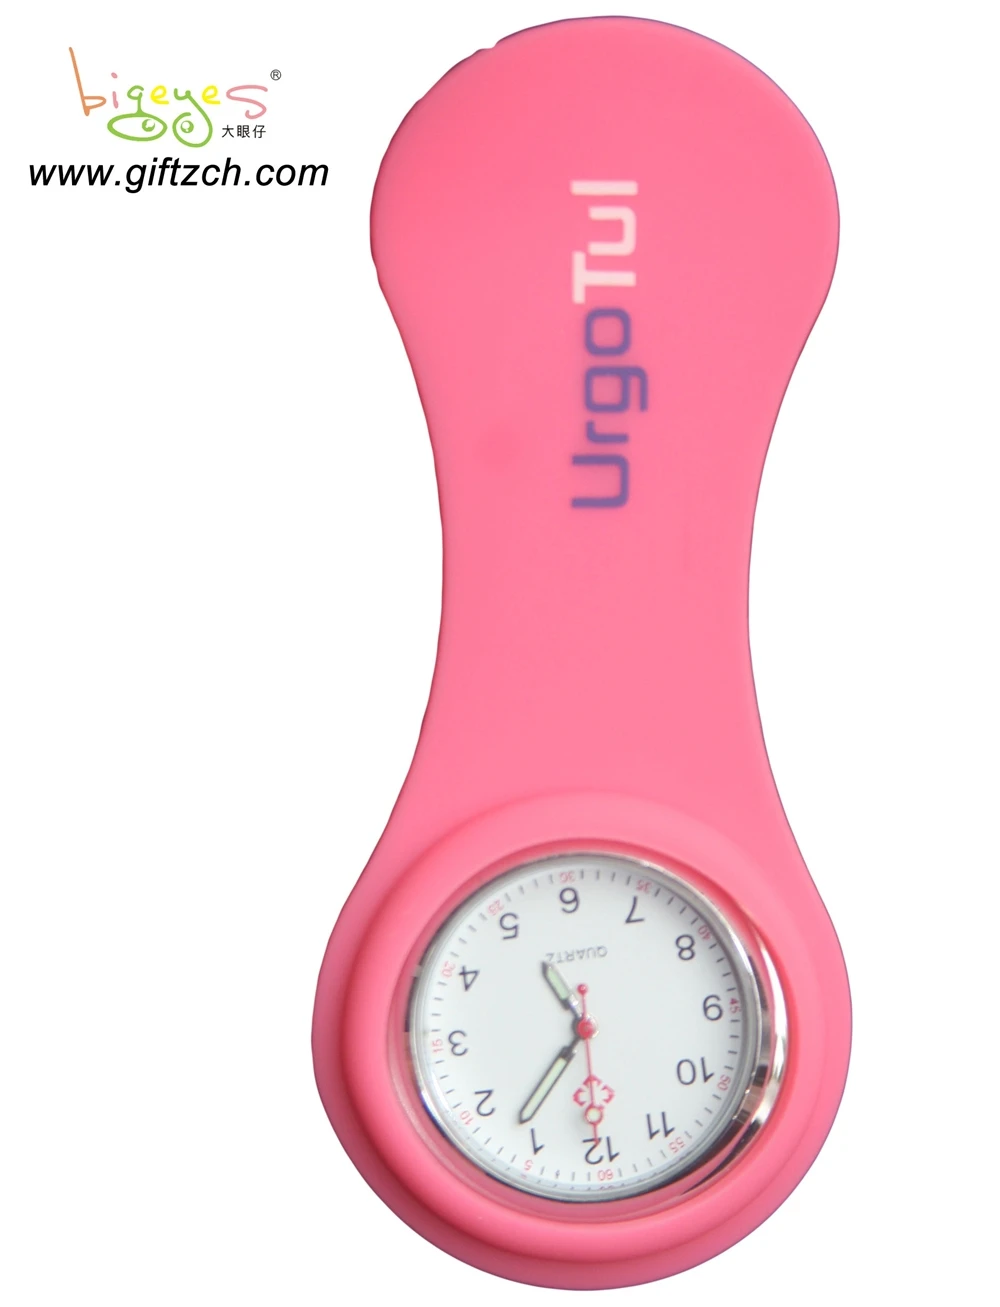 
Womens quartz brooch pocket nursing watch, Best medical watch for nurses students doctors reloj de enfermera de silicona 